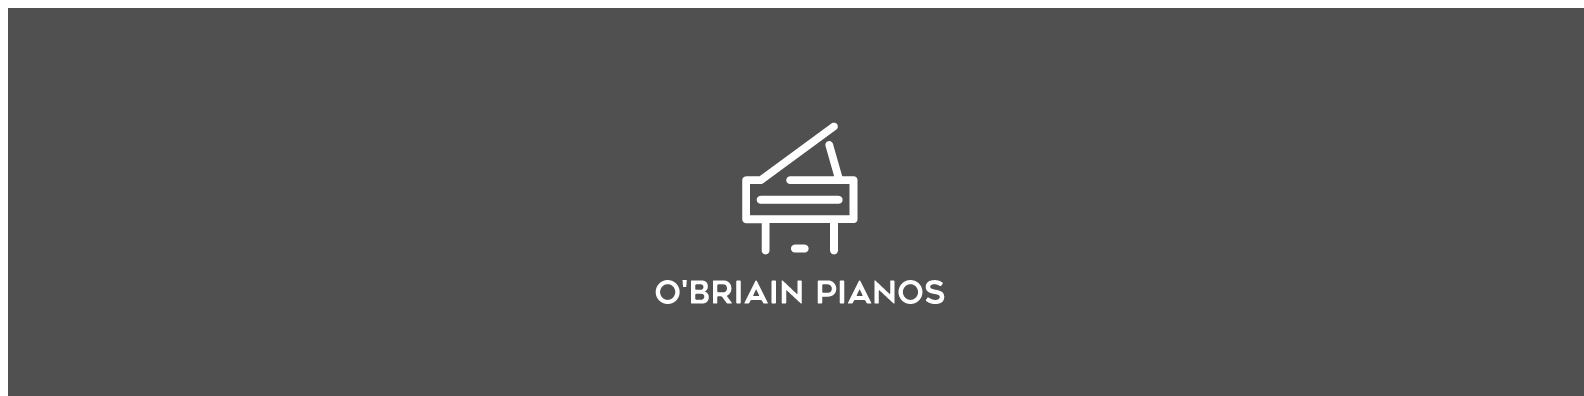 O'Briain Pianos |  Pianos for Sale | Lucan, Dublin, Ireland-O'Briain Pianos